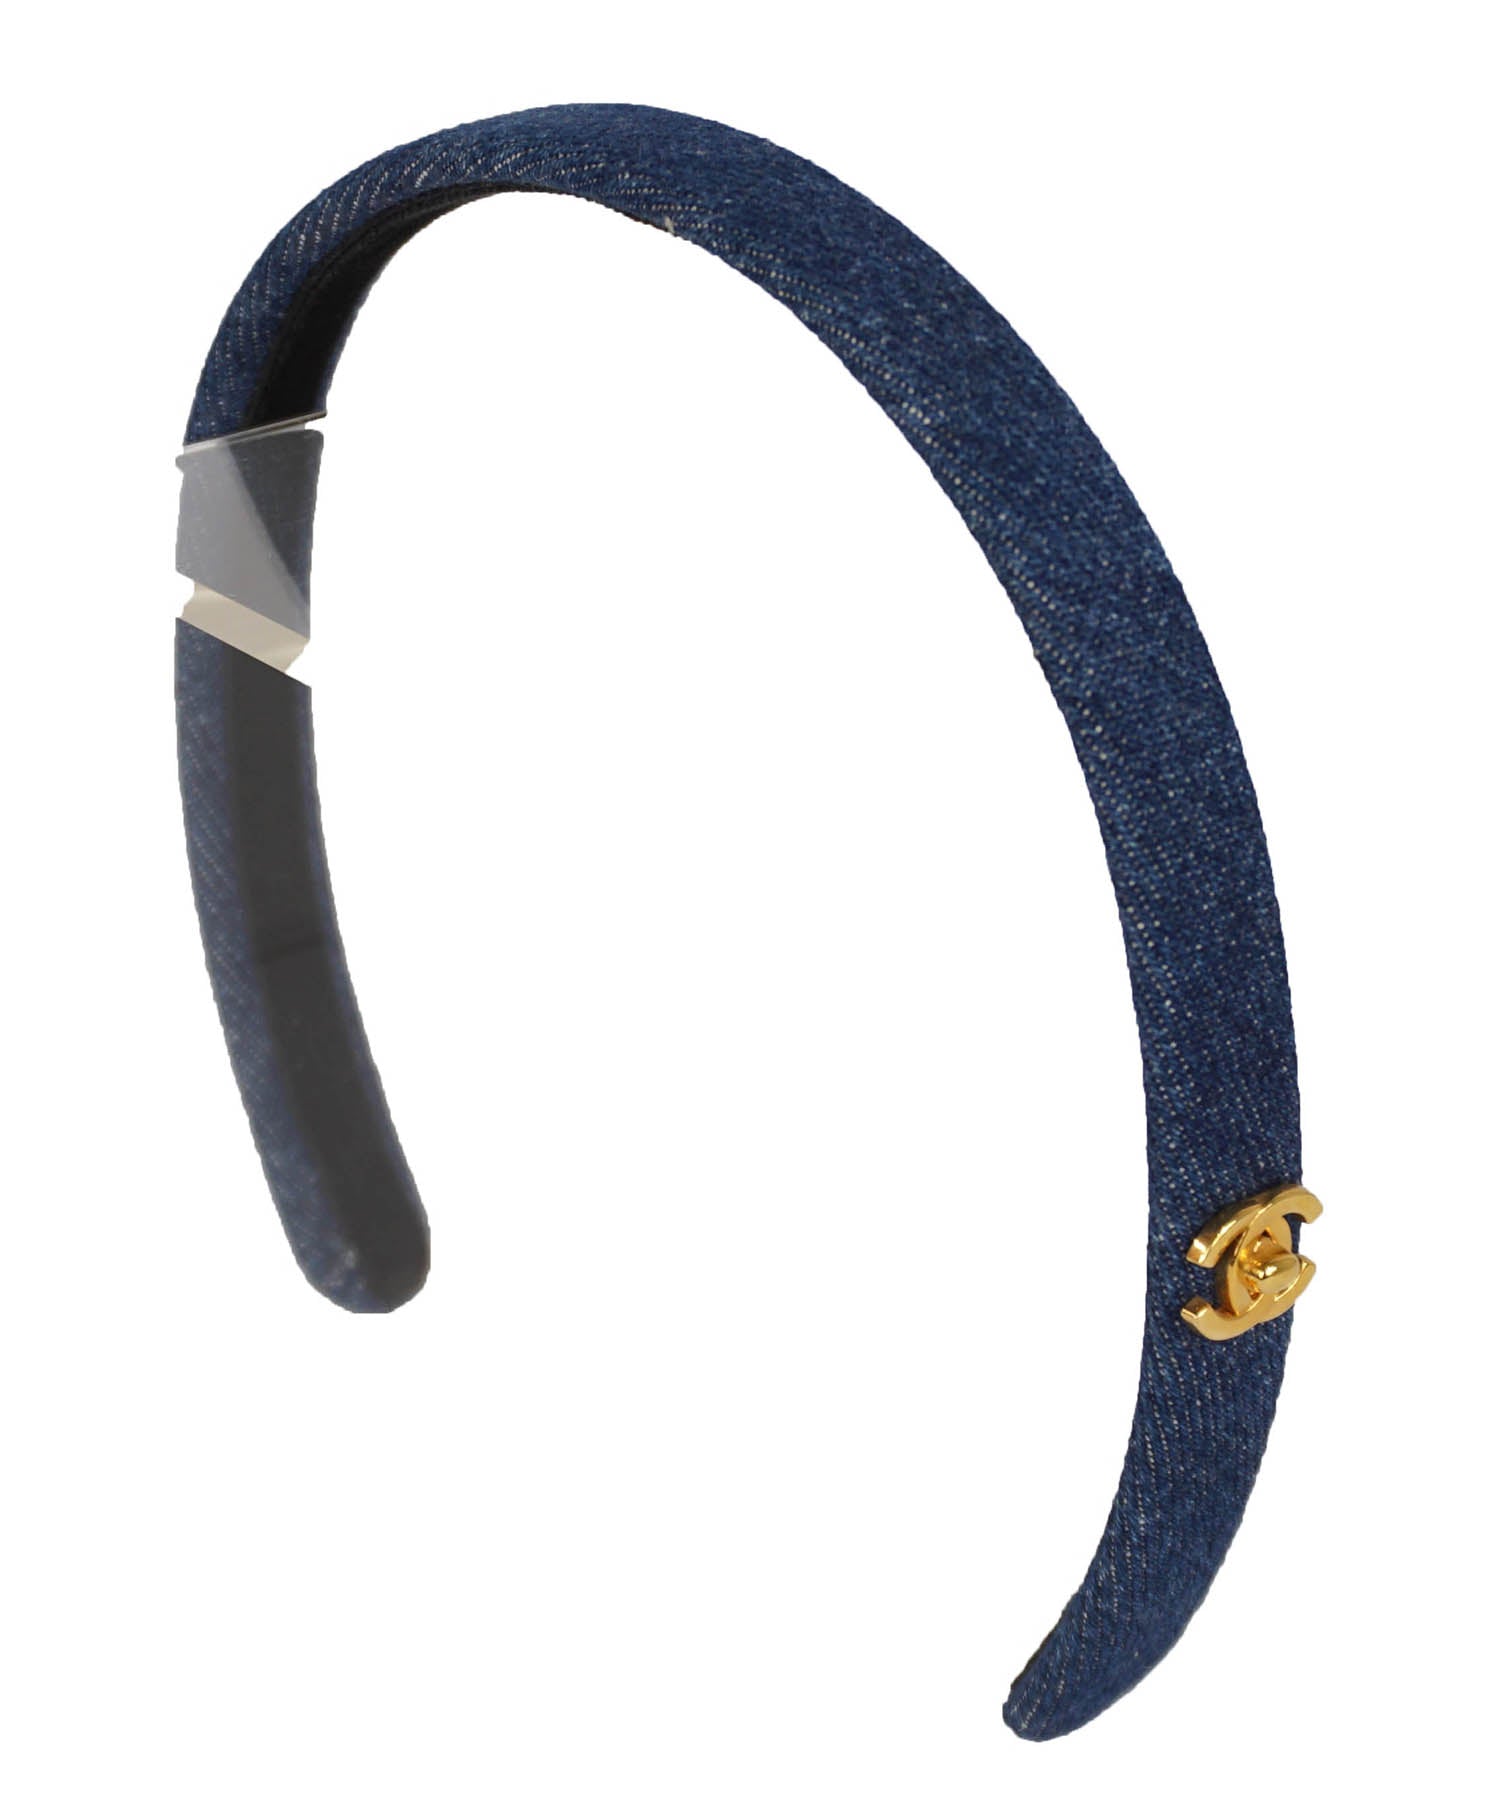 Antique tie handmade headband - CHANEL Chanel - dark blue - bow